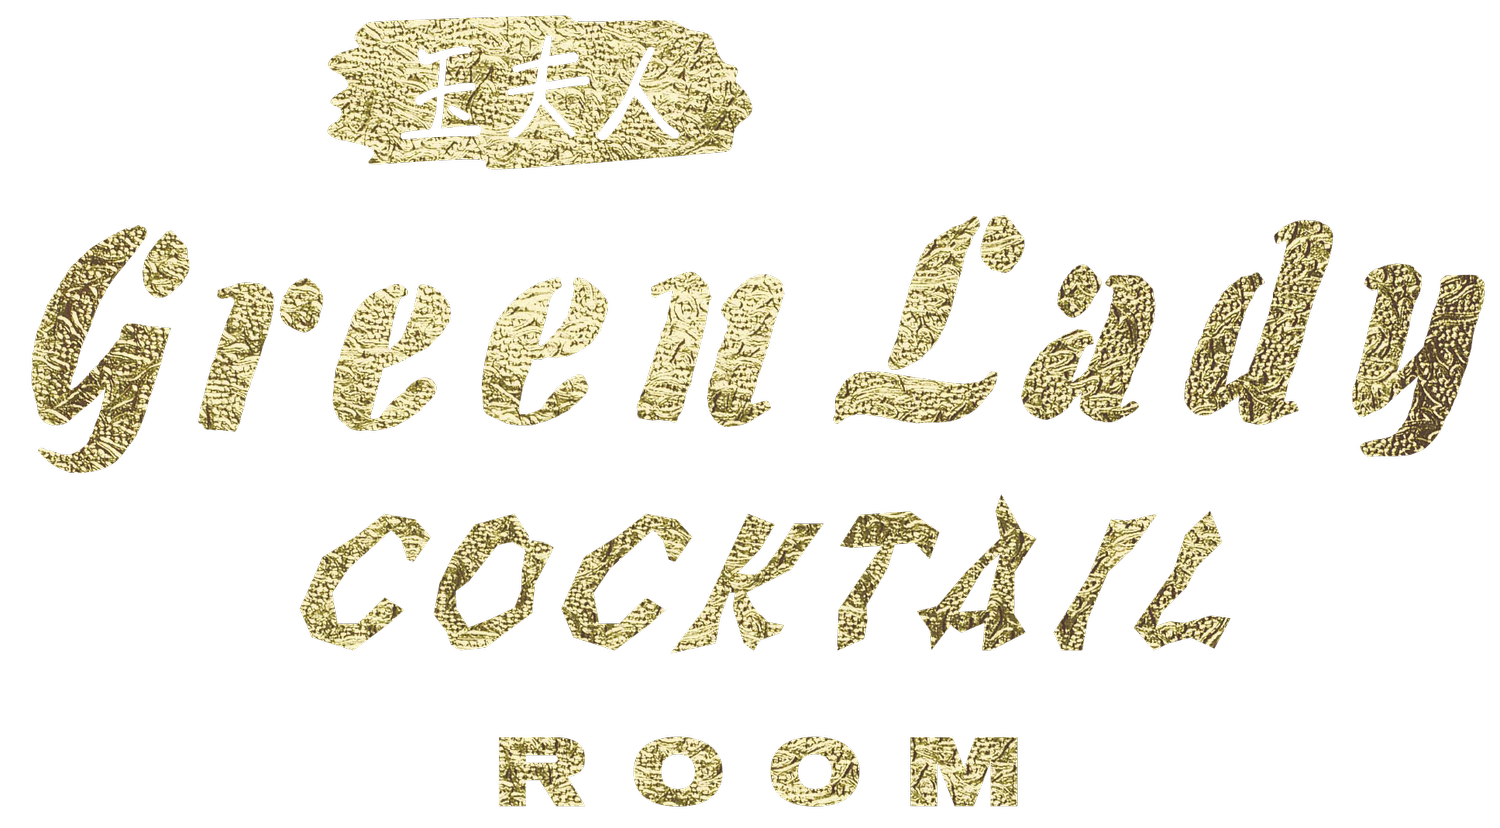 Green Lady Cocktail Room Waikiki